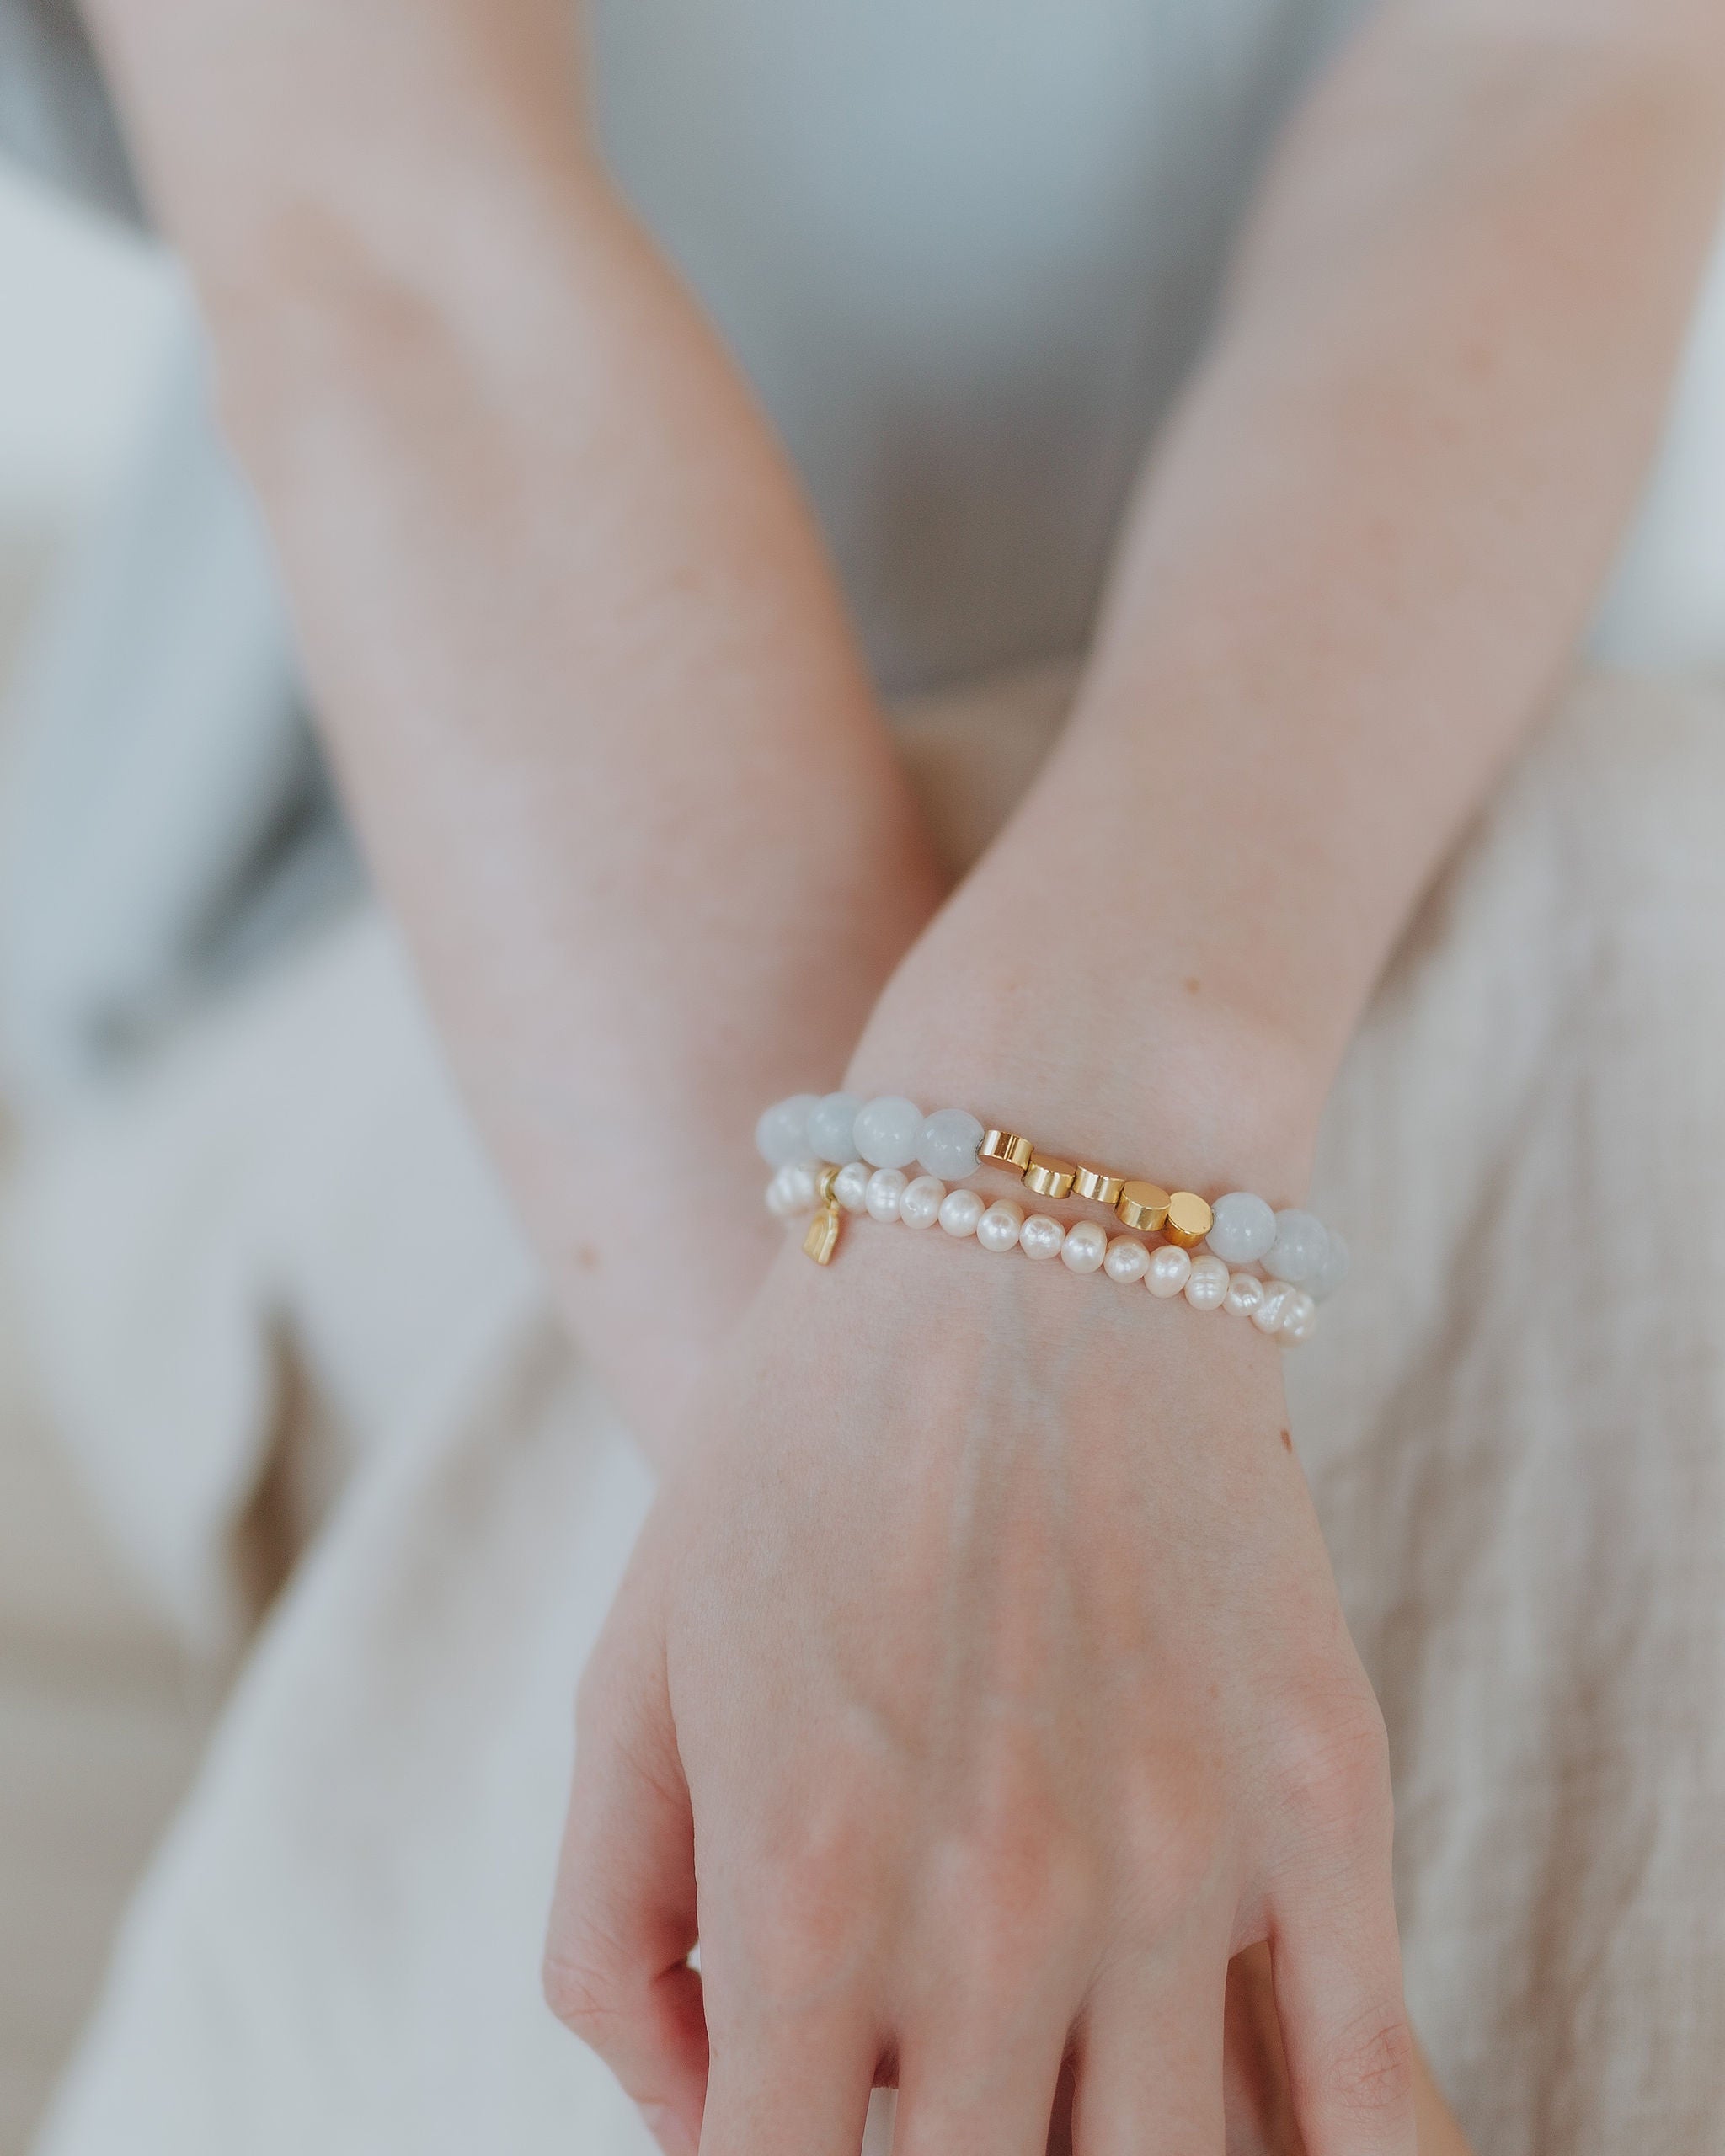  ZOKCC Inspirational Gifts Bracelets for Women Healing